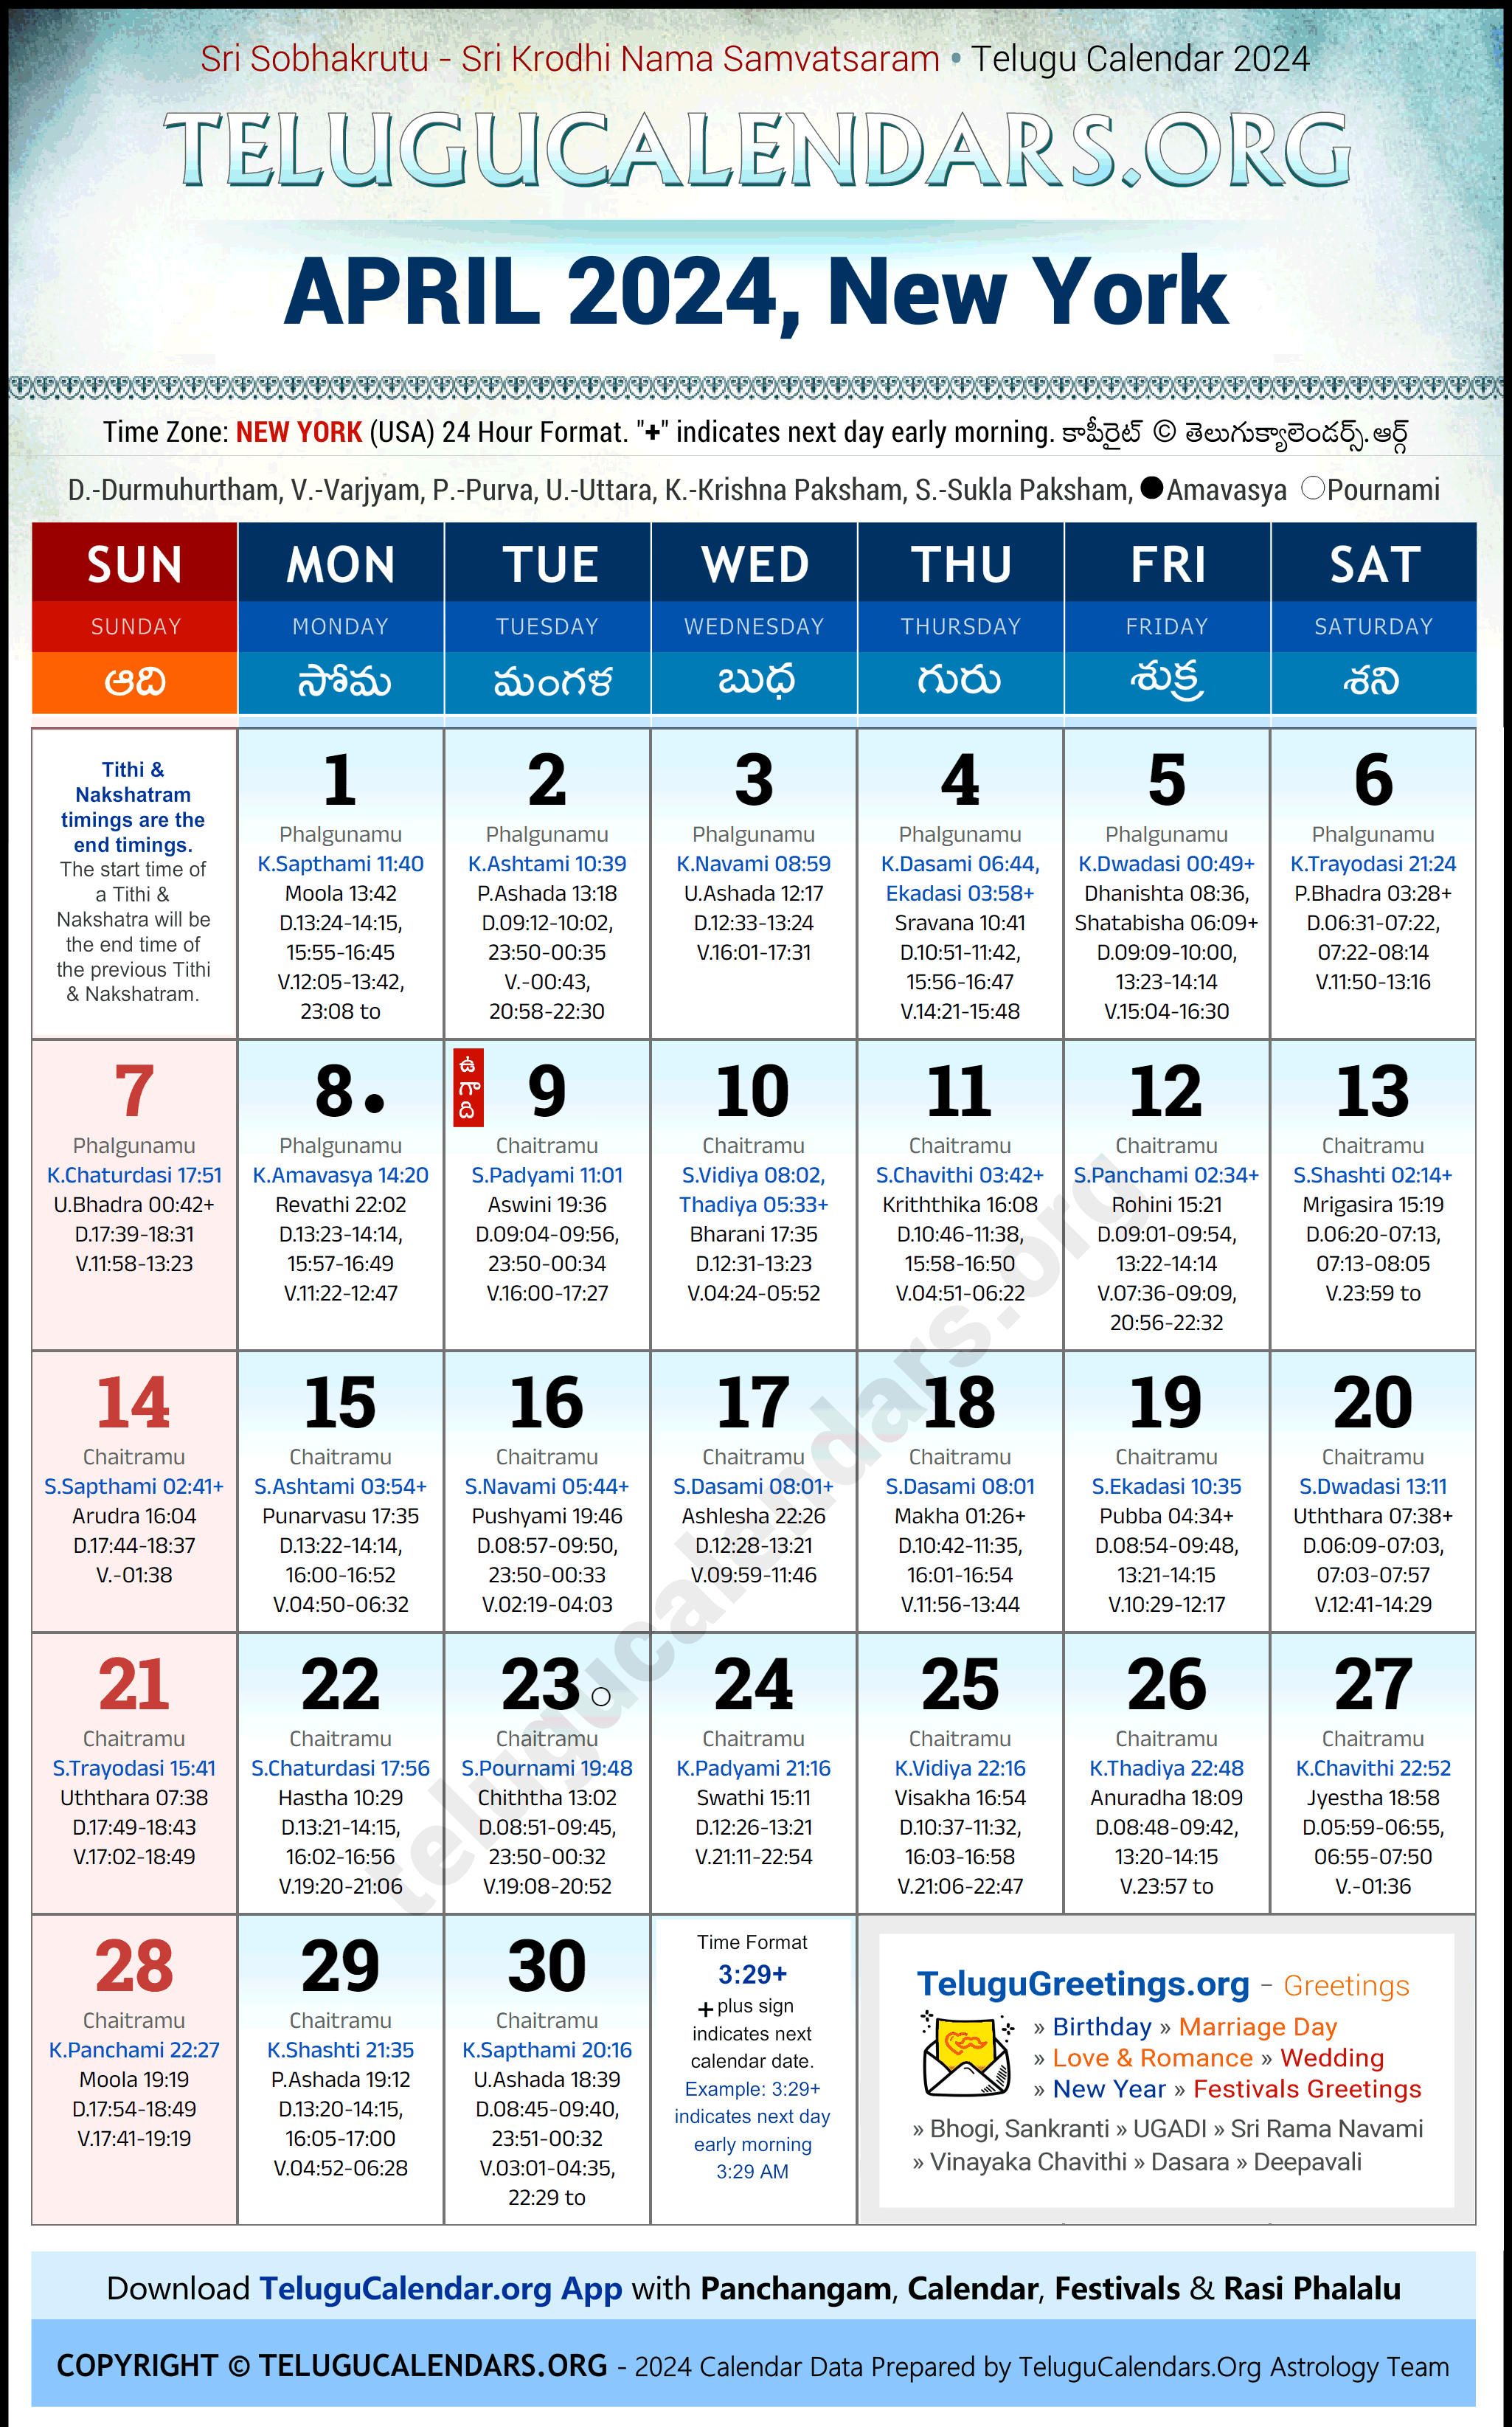 Telugu Calendar 2024 April Festivals for New York